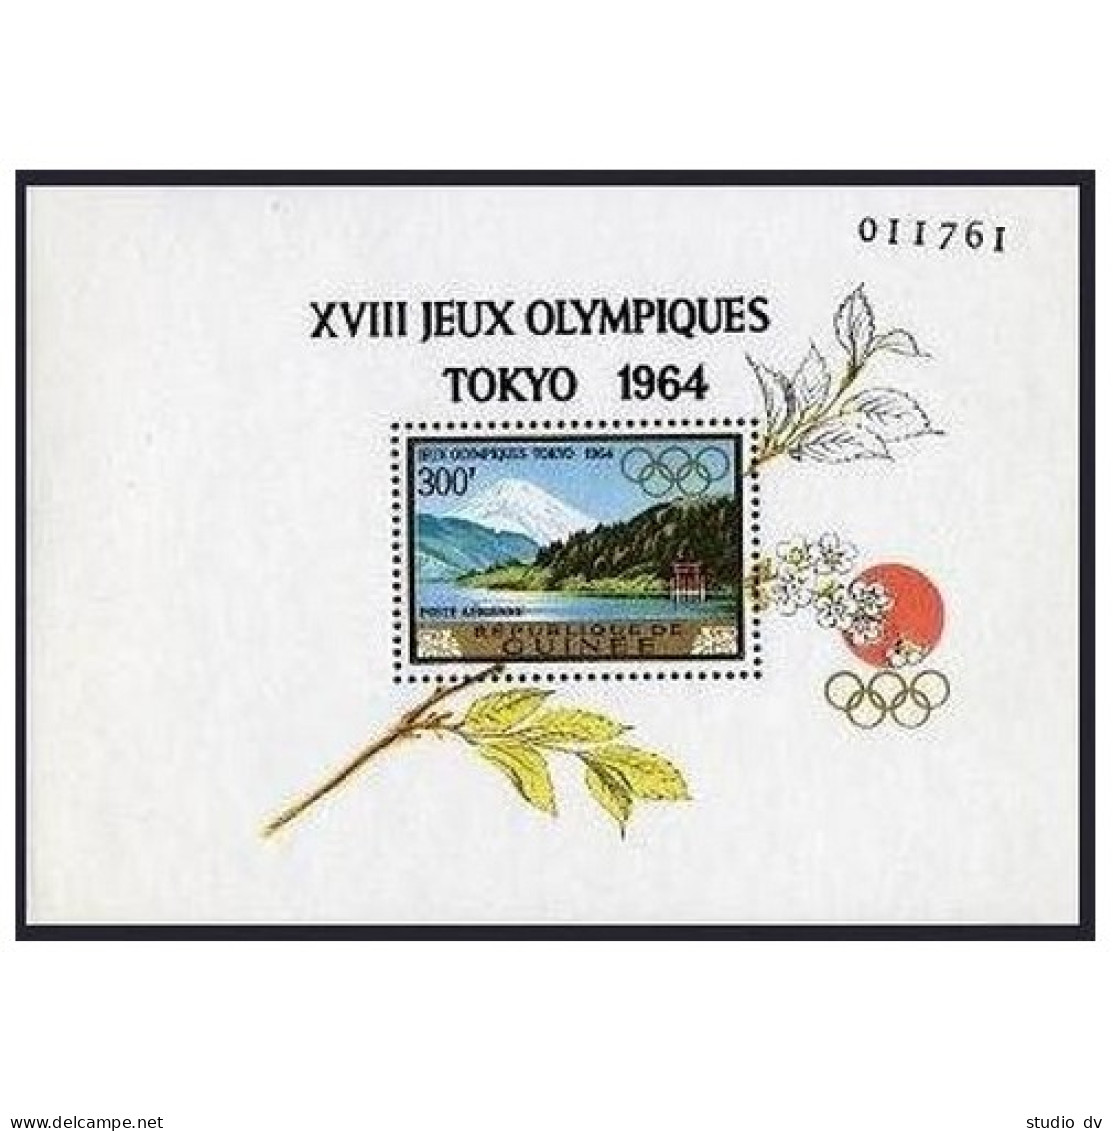 Guinea C65a-C65b Sheets, Hinged. Michel Bl.5-6. Olympics Tokyo-1964. Mt. Fuji. - Guinea (1958-...)